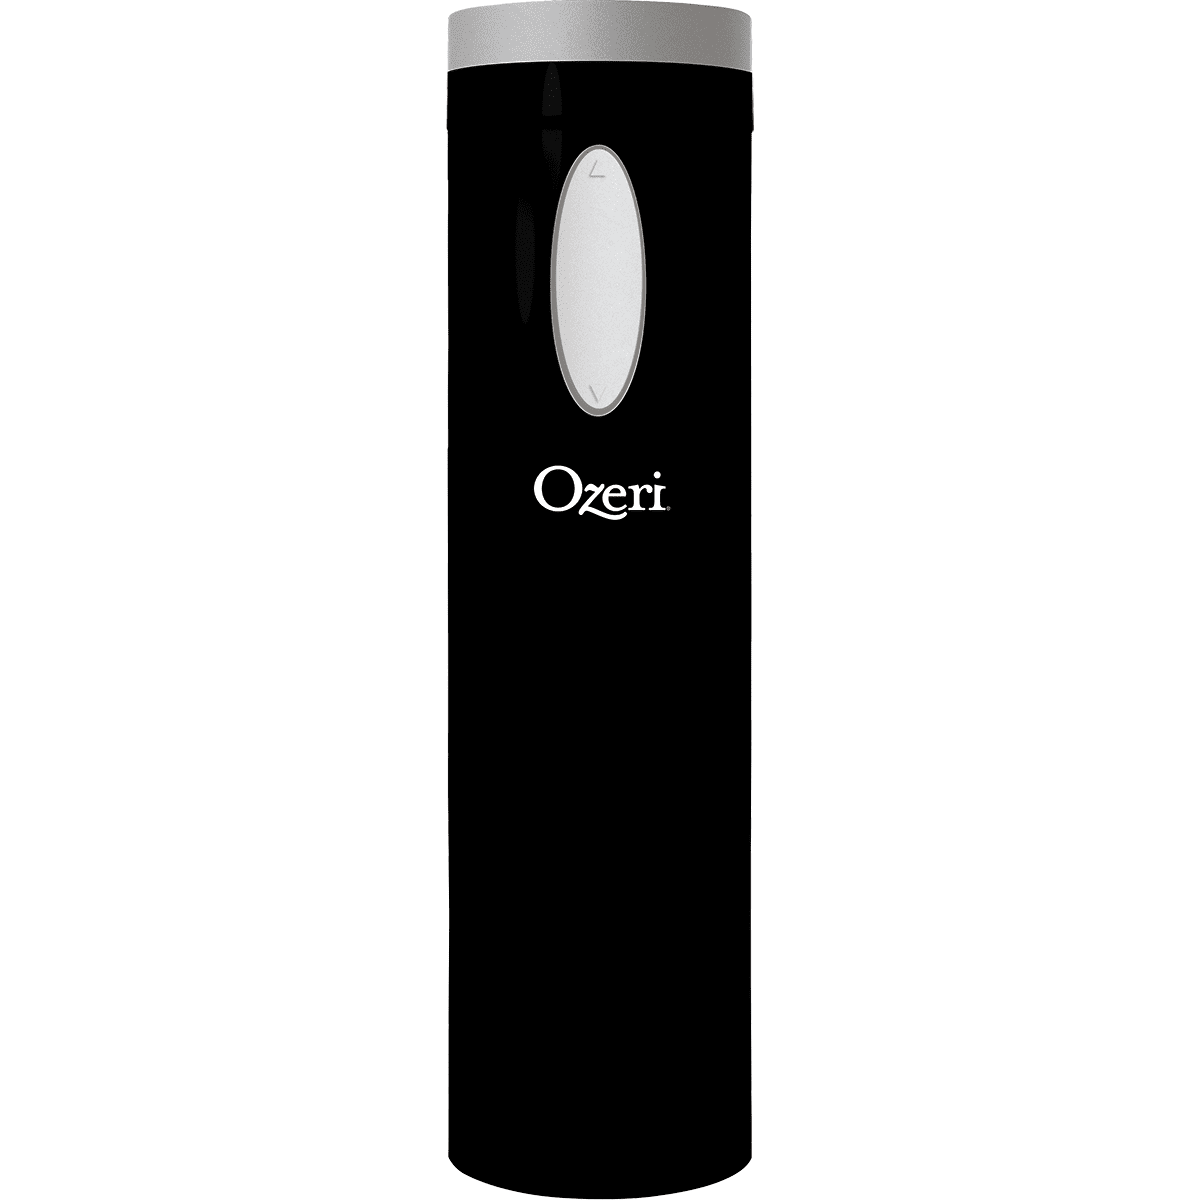 Ozeri Fascina Electric Wine Bottle Opener And Corkscrew - Black